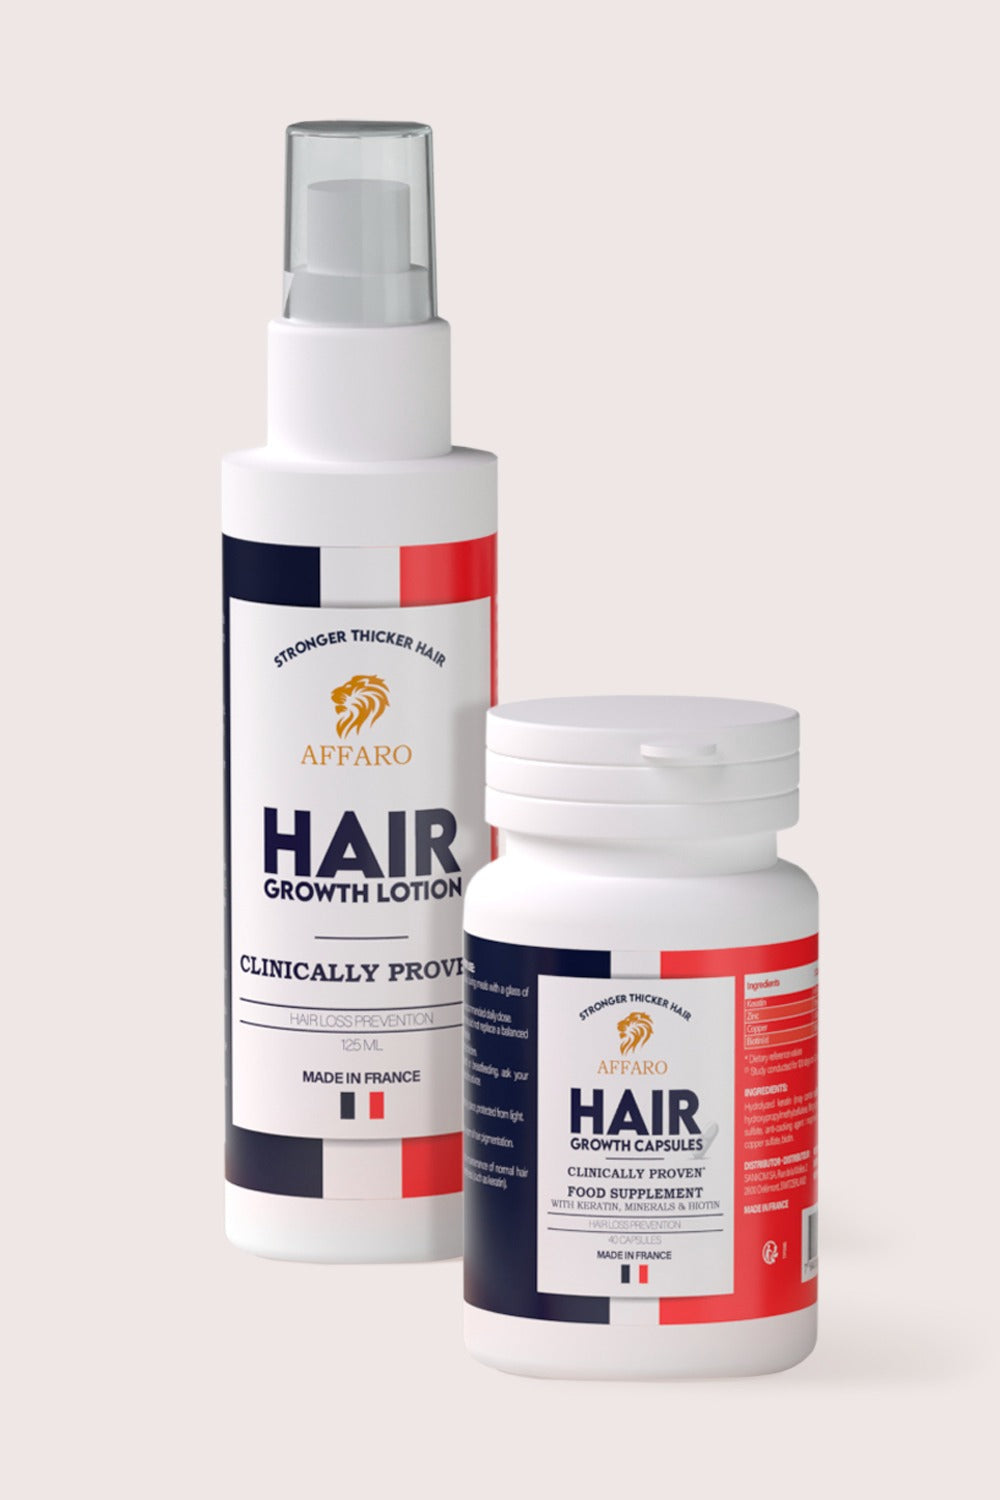 Affaro HAIR CARE SET: Hair Growth Capsules and Hair Growth Lotion